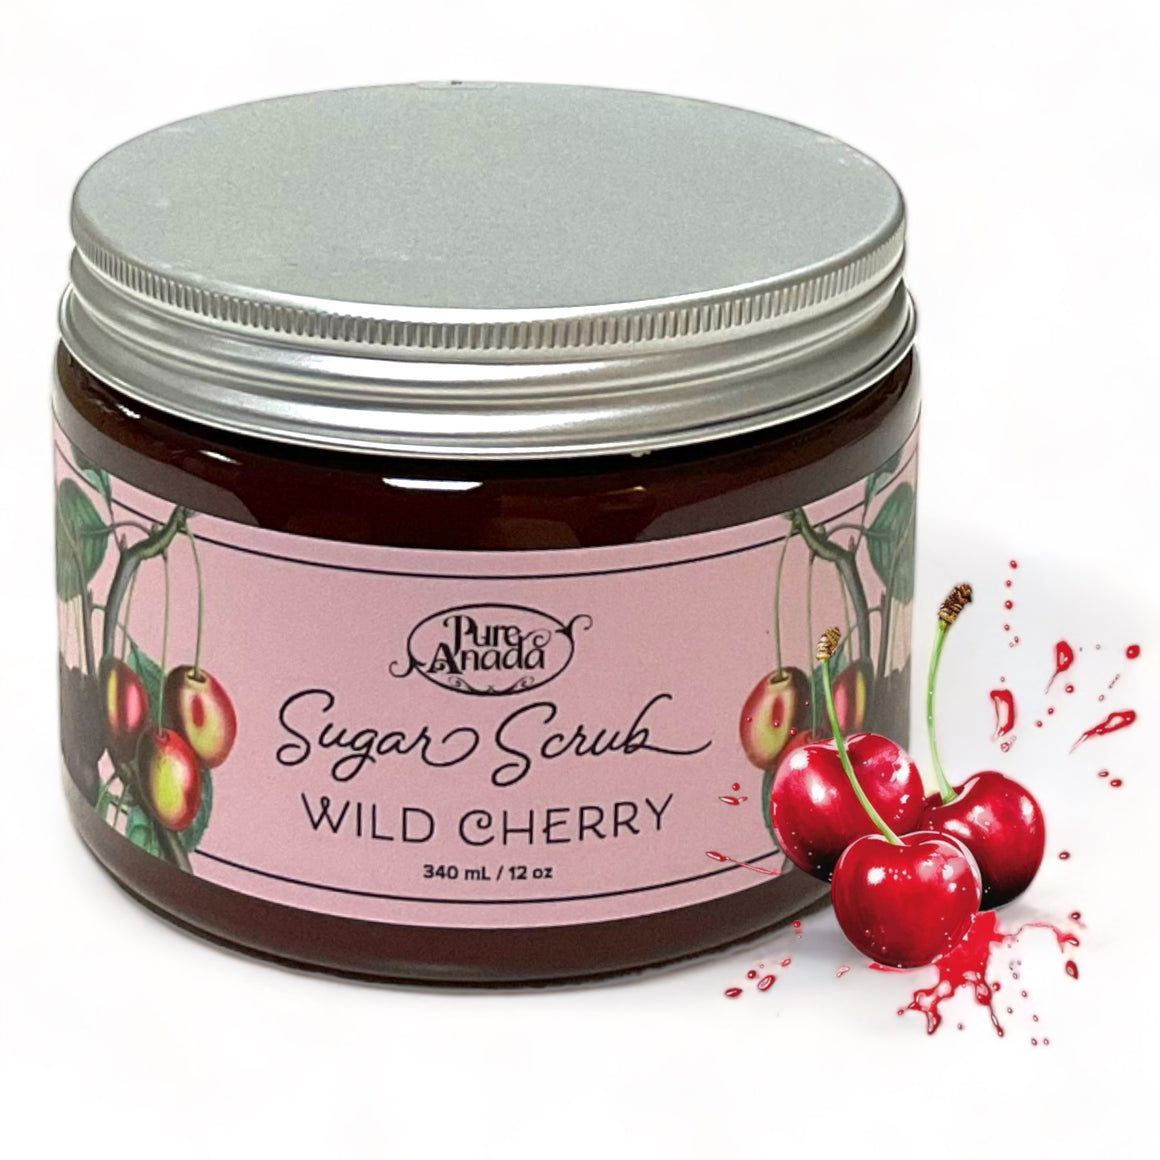 Wild Cherry Sugar Scrub 340ml - Pure Anada